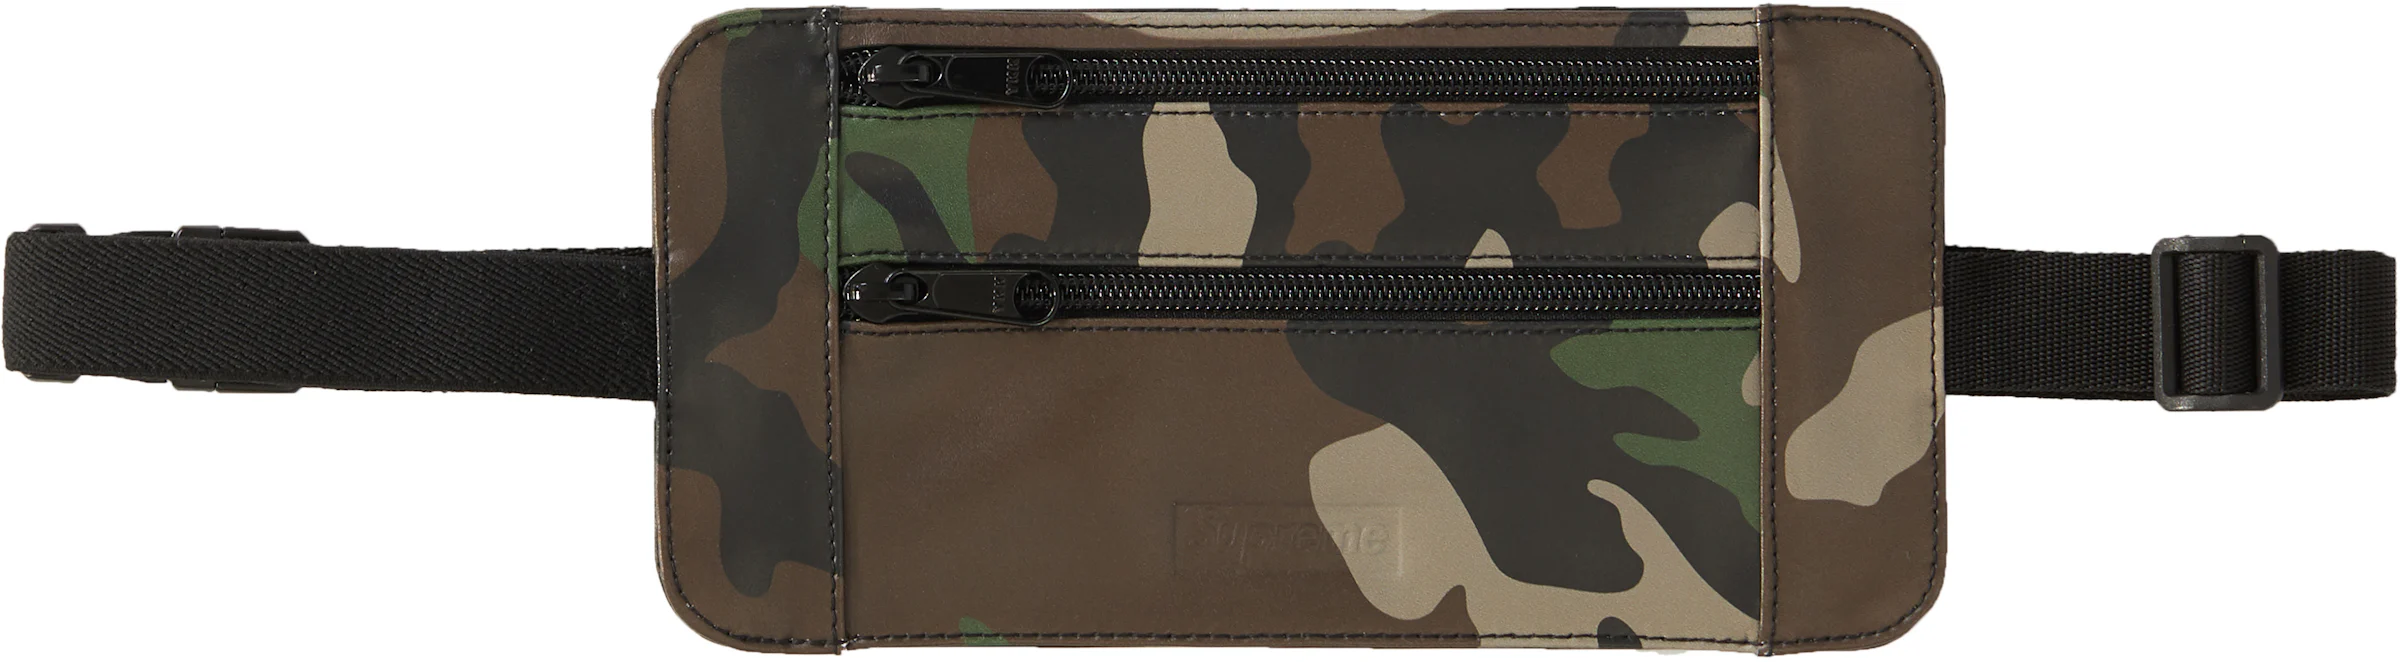 Supreme Leather Waist/Shoulder Pouch Woodland Camo - SS19 - US